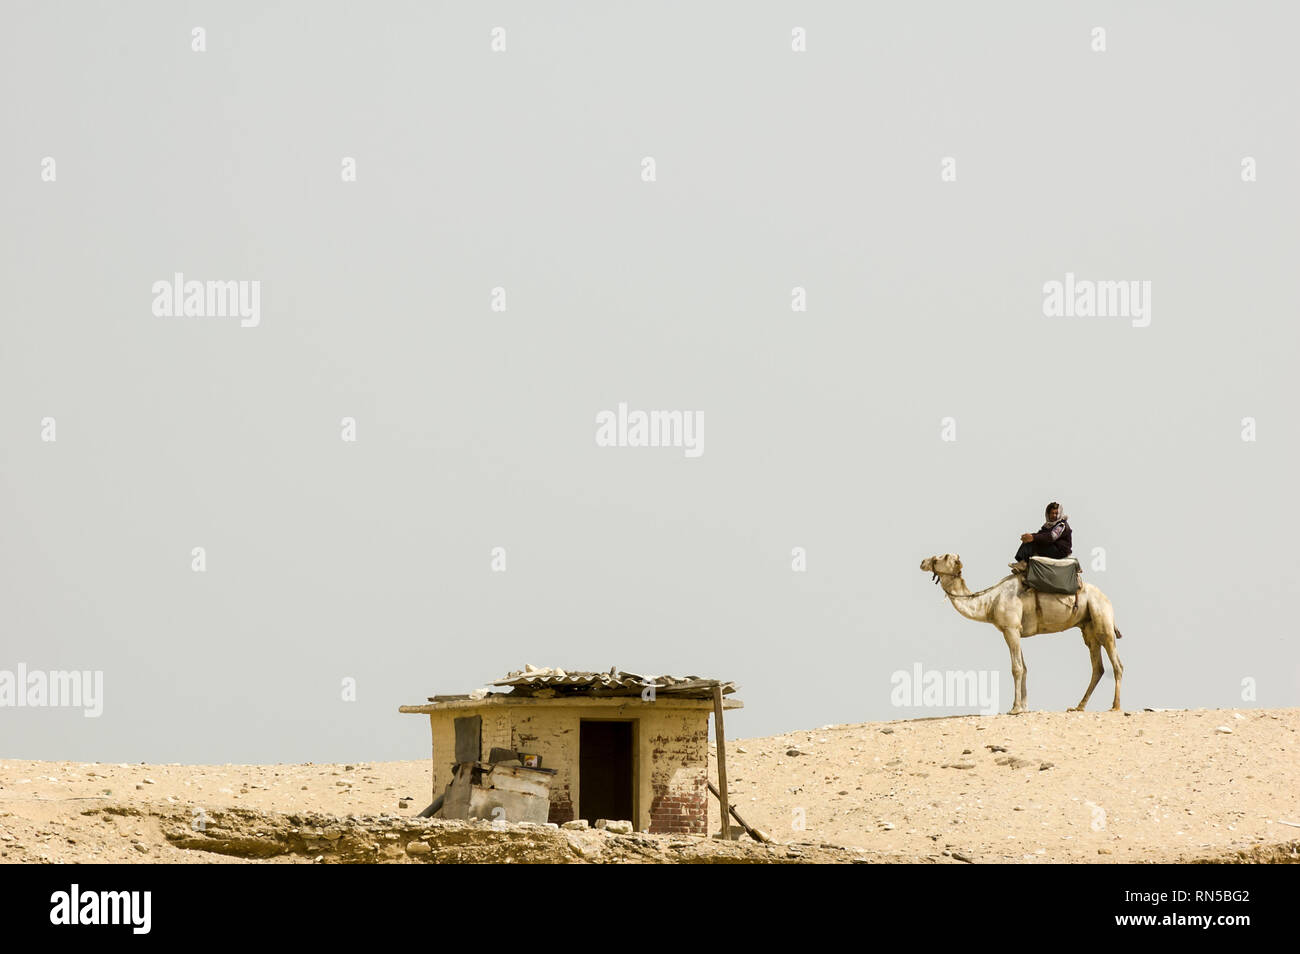 Saqqara, Egypt - April 13 2008: camel driver on the desert dunes near the archaeological site of Saqqara Stock Photo